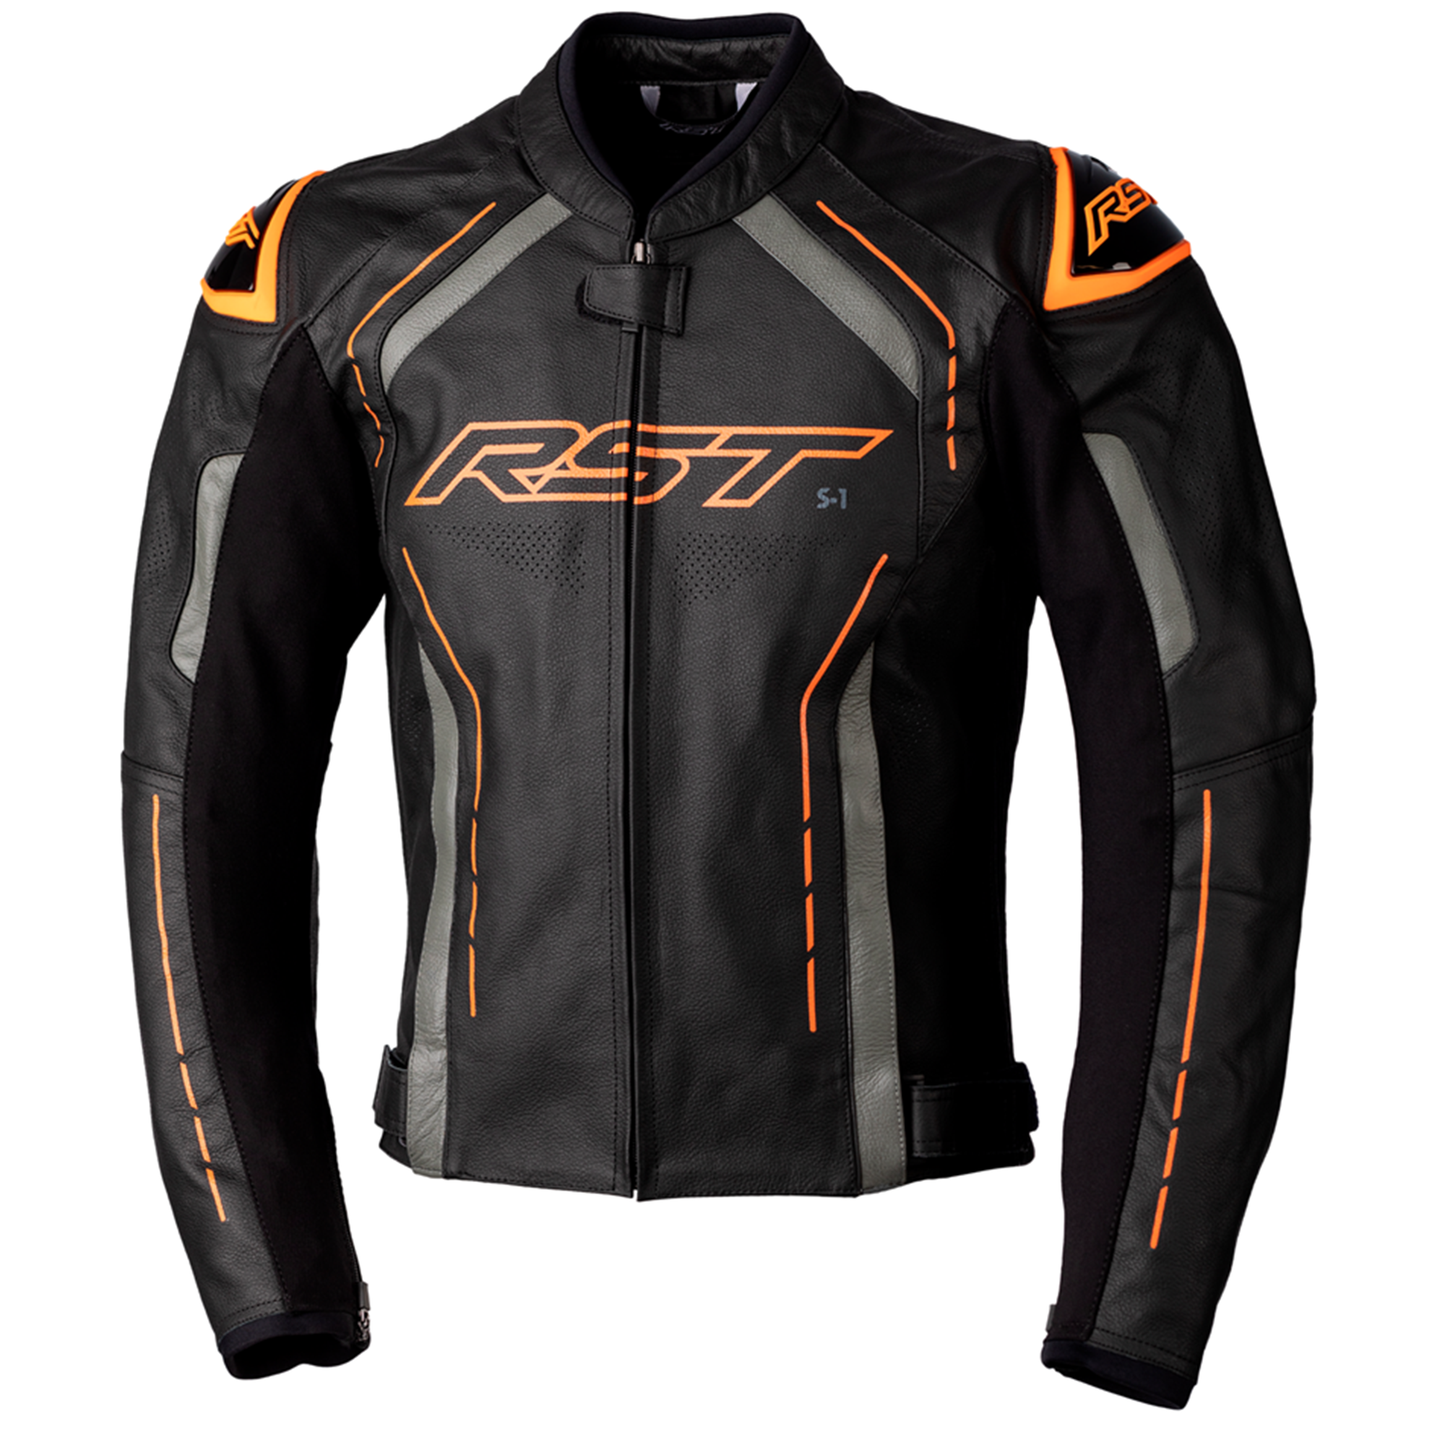 RST S1 (CE) Men's Leather Jacket - Black/Grey/Neon Orange (2977)